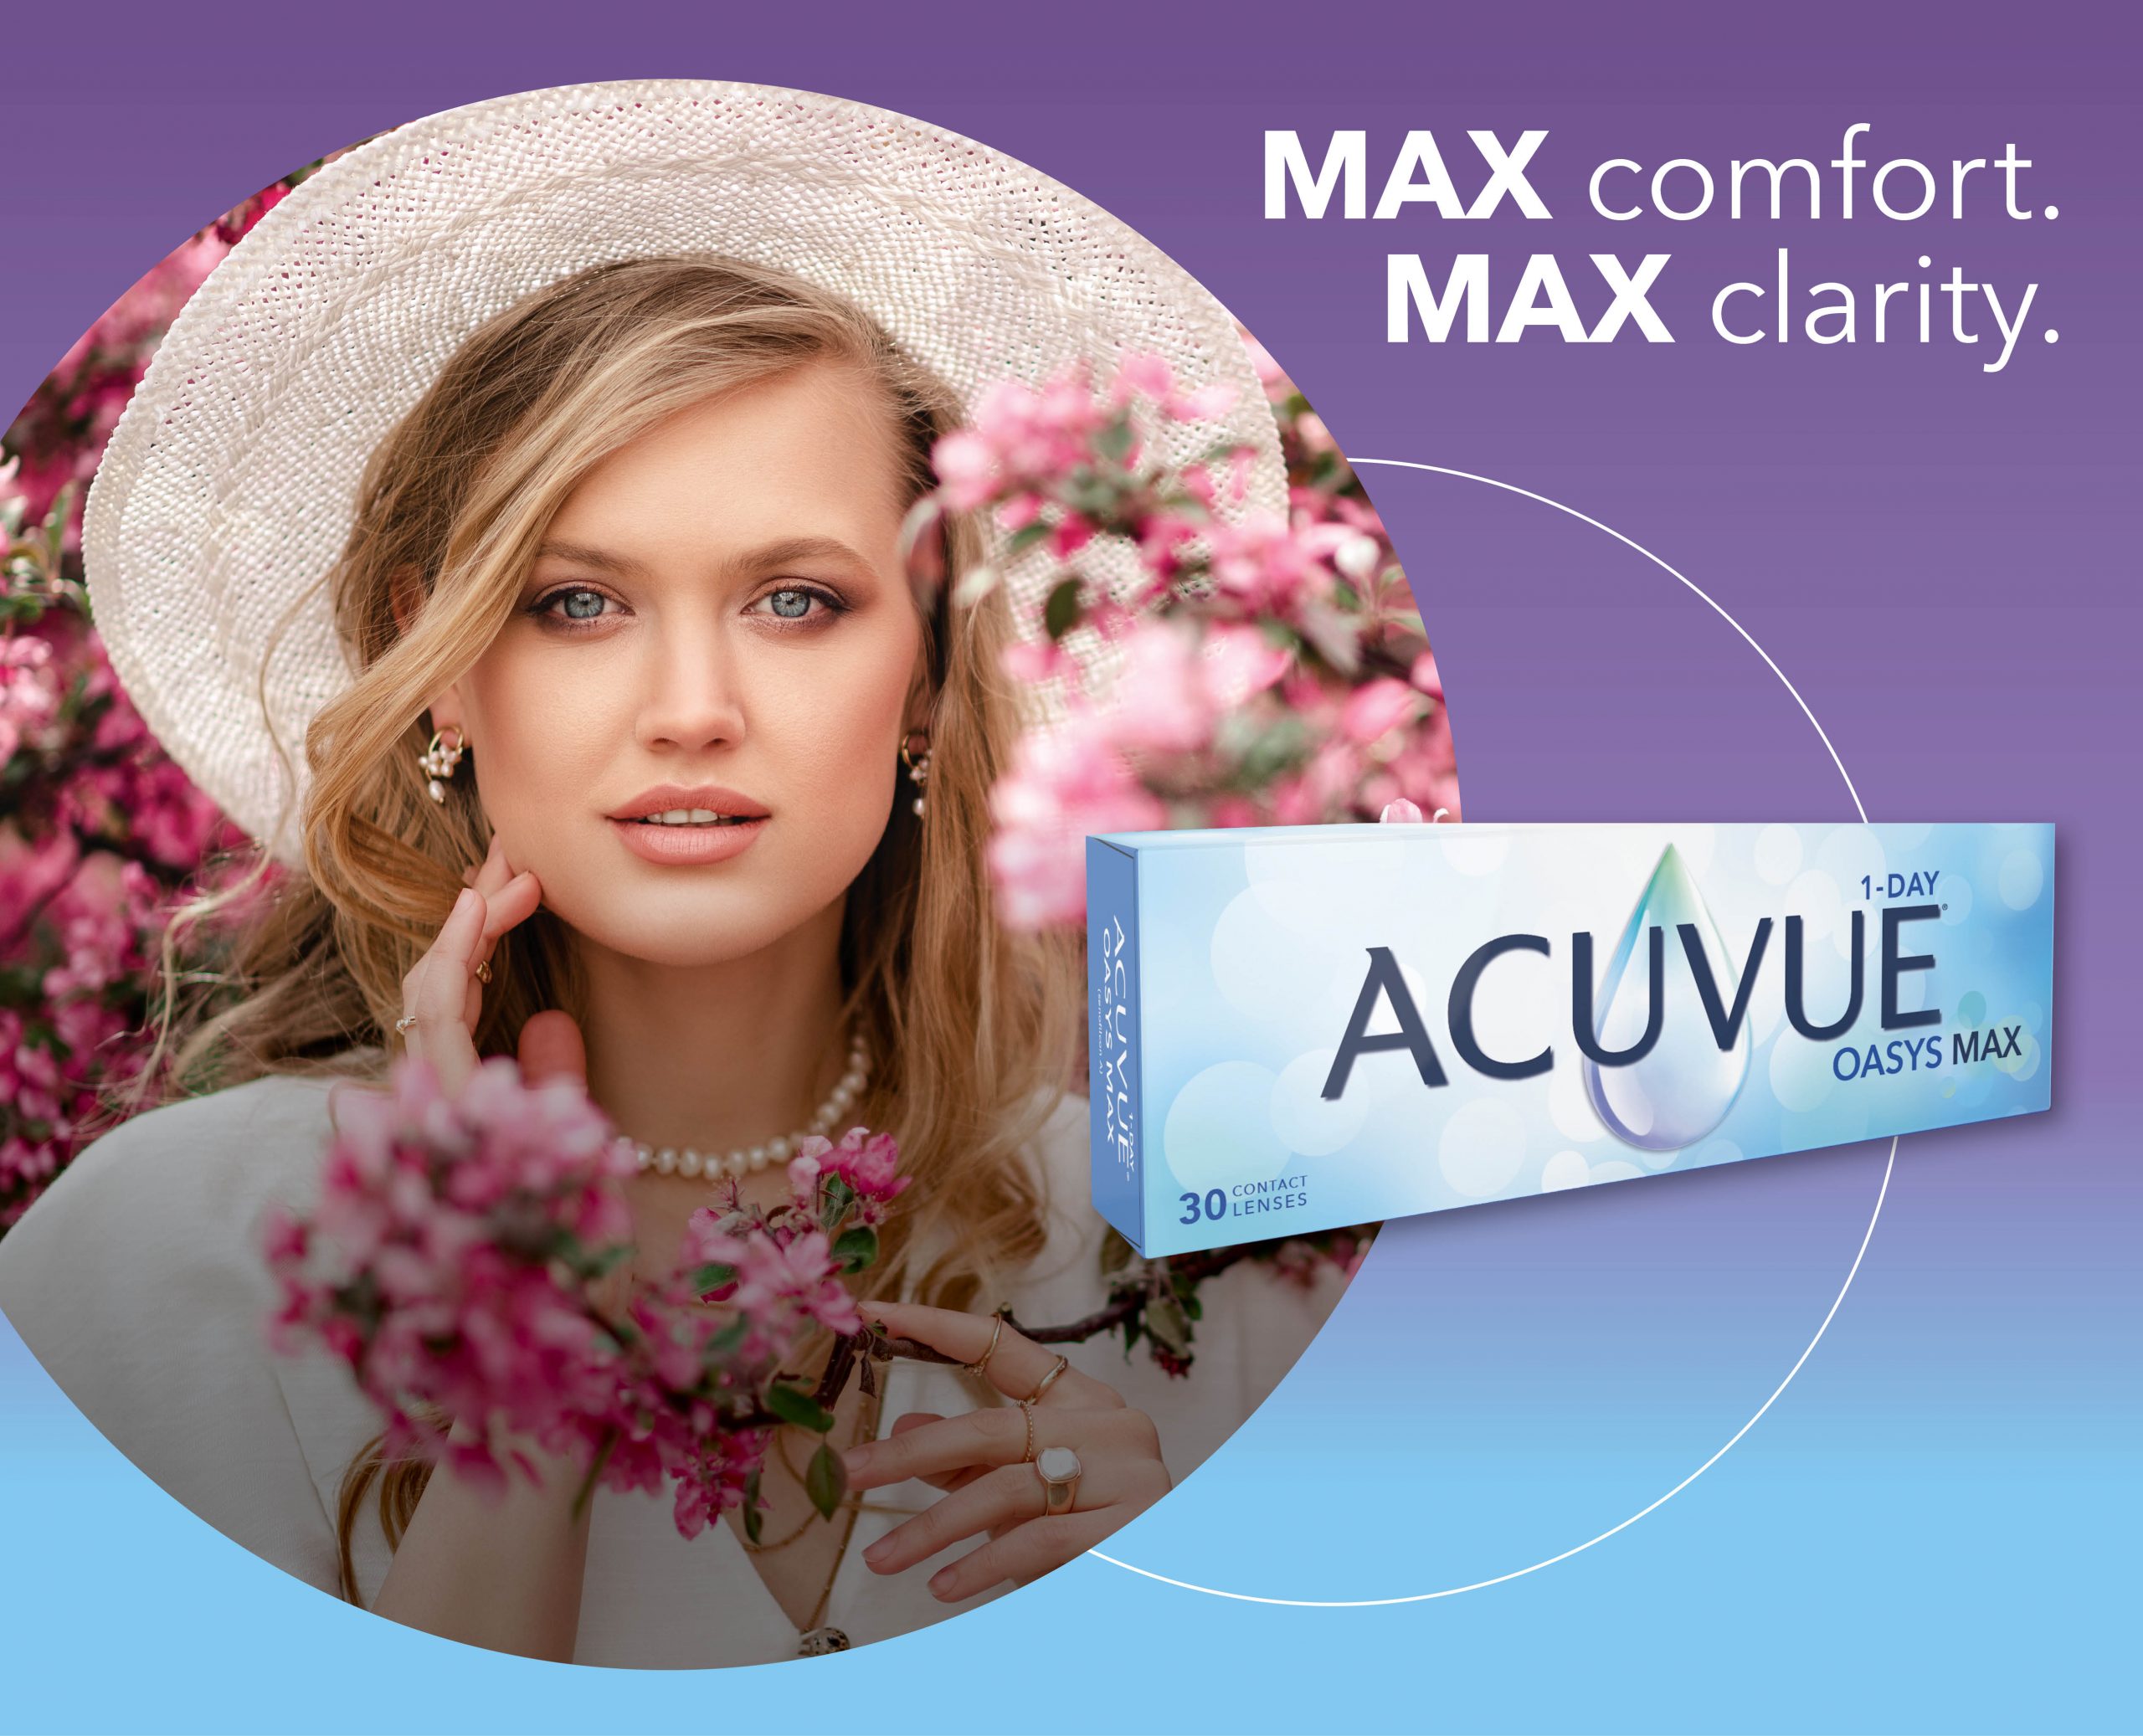 Max Comfort. Max Clarity. Acuvue Oasis Max